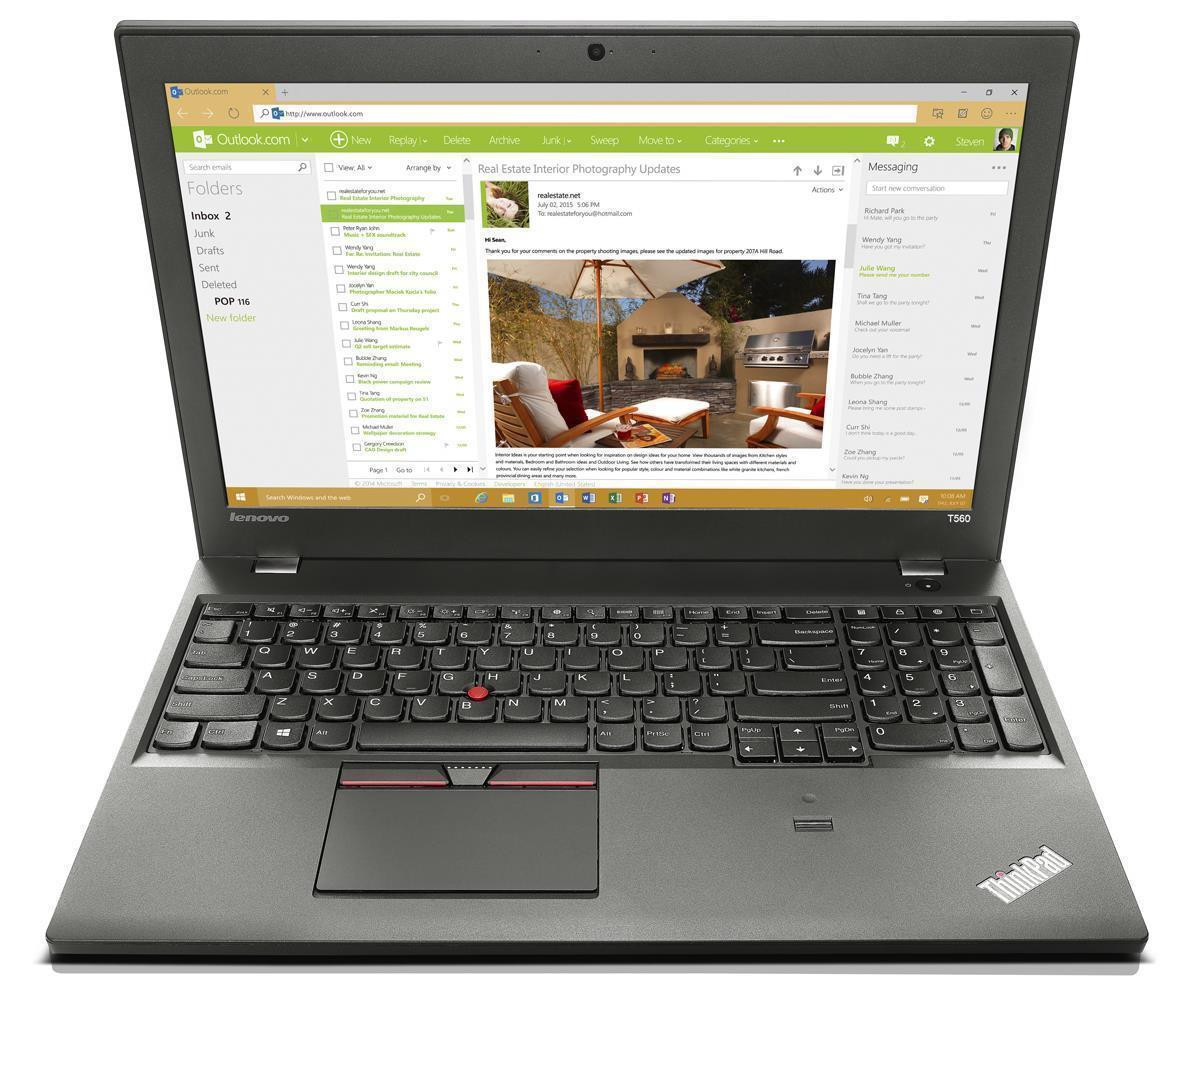 Lenovo ThinkPad T560 Ultrabook Core i5-6300U 2,40GHz 8GB RAM 256GB SSD FHD W10P